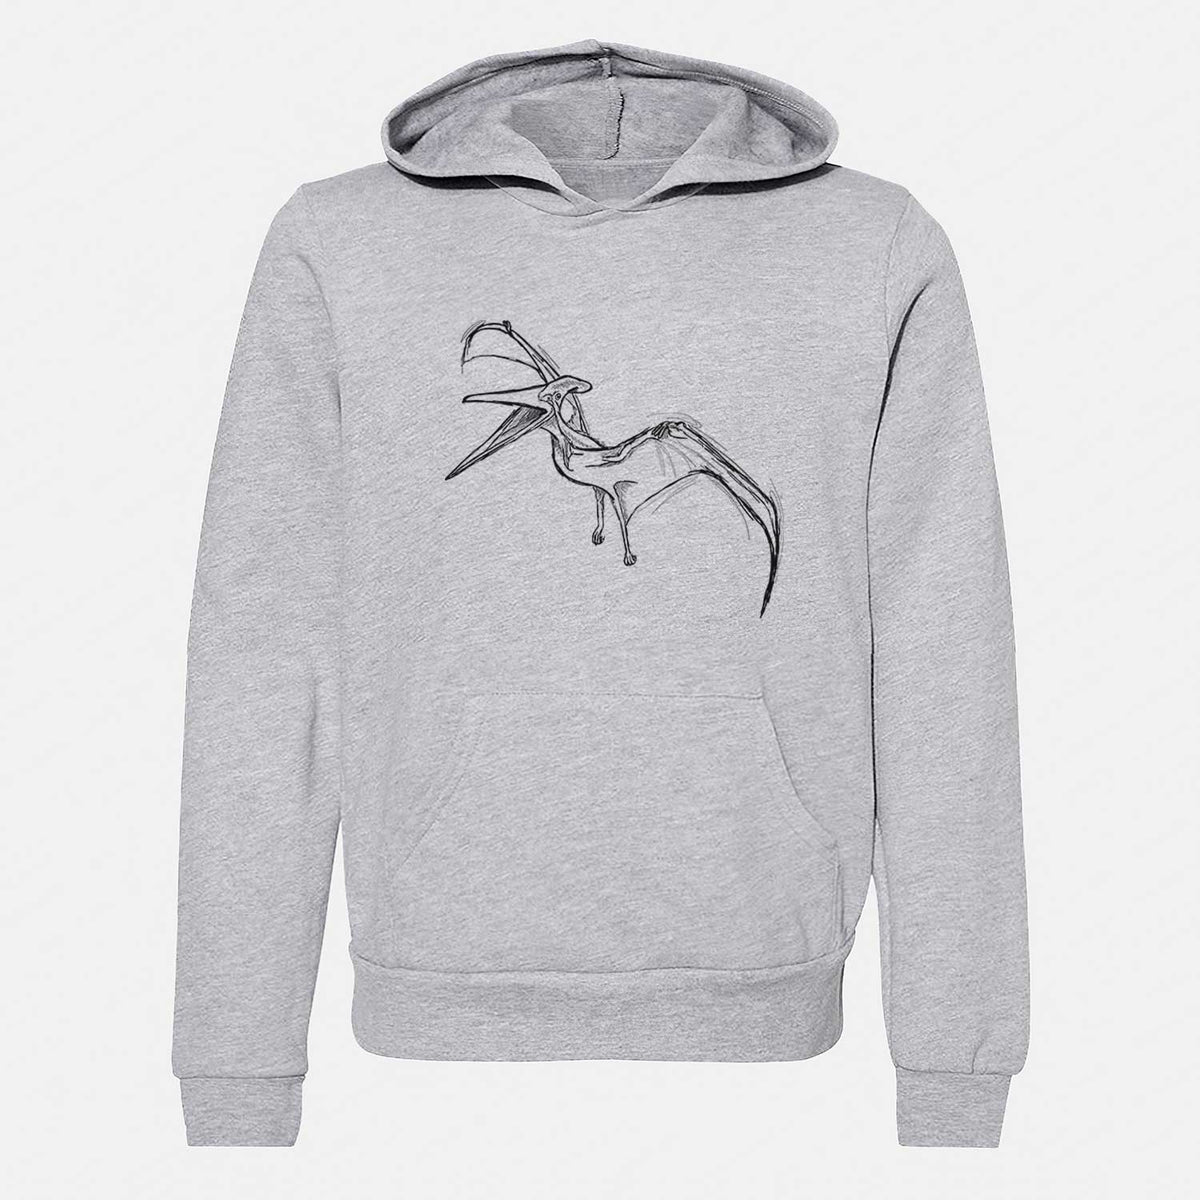 Pteranodon Longiceps - Youth Hoodie Sweatshirt